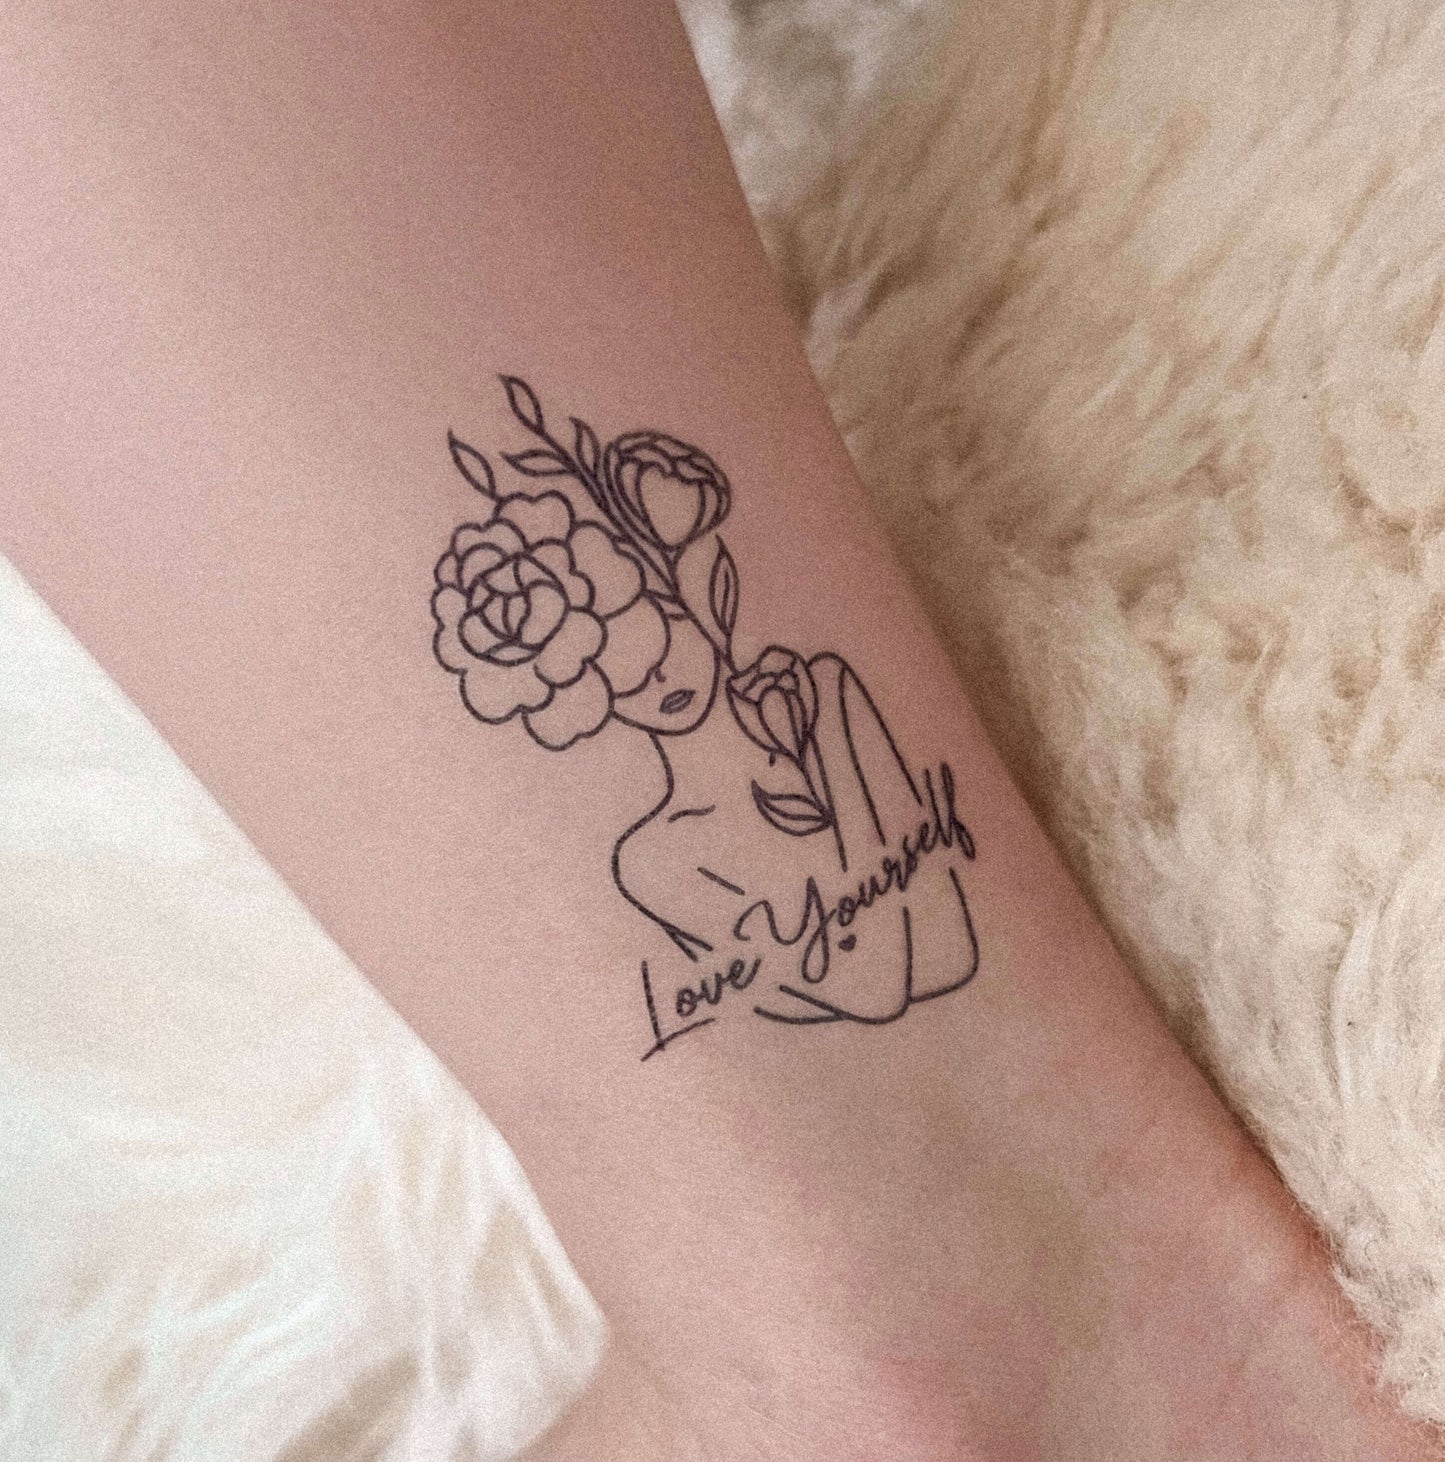 love yourself - tattoo